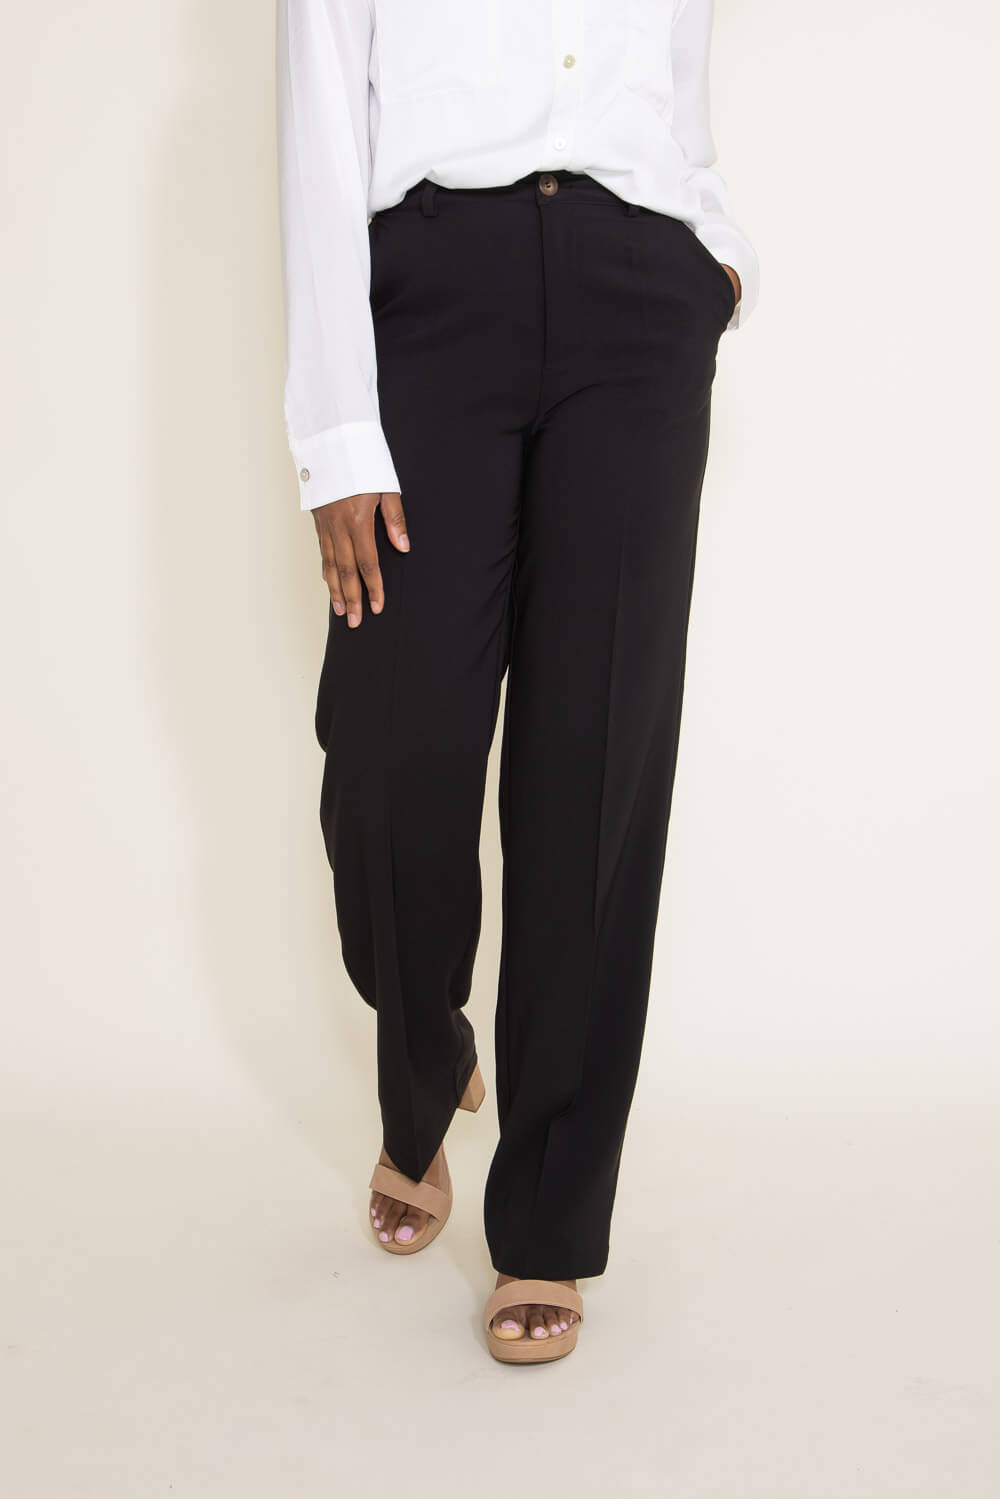 Buy Women Mid Rise Crepe Pants (S) Black at Amazon.in